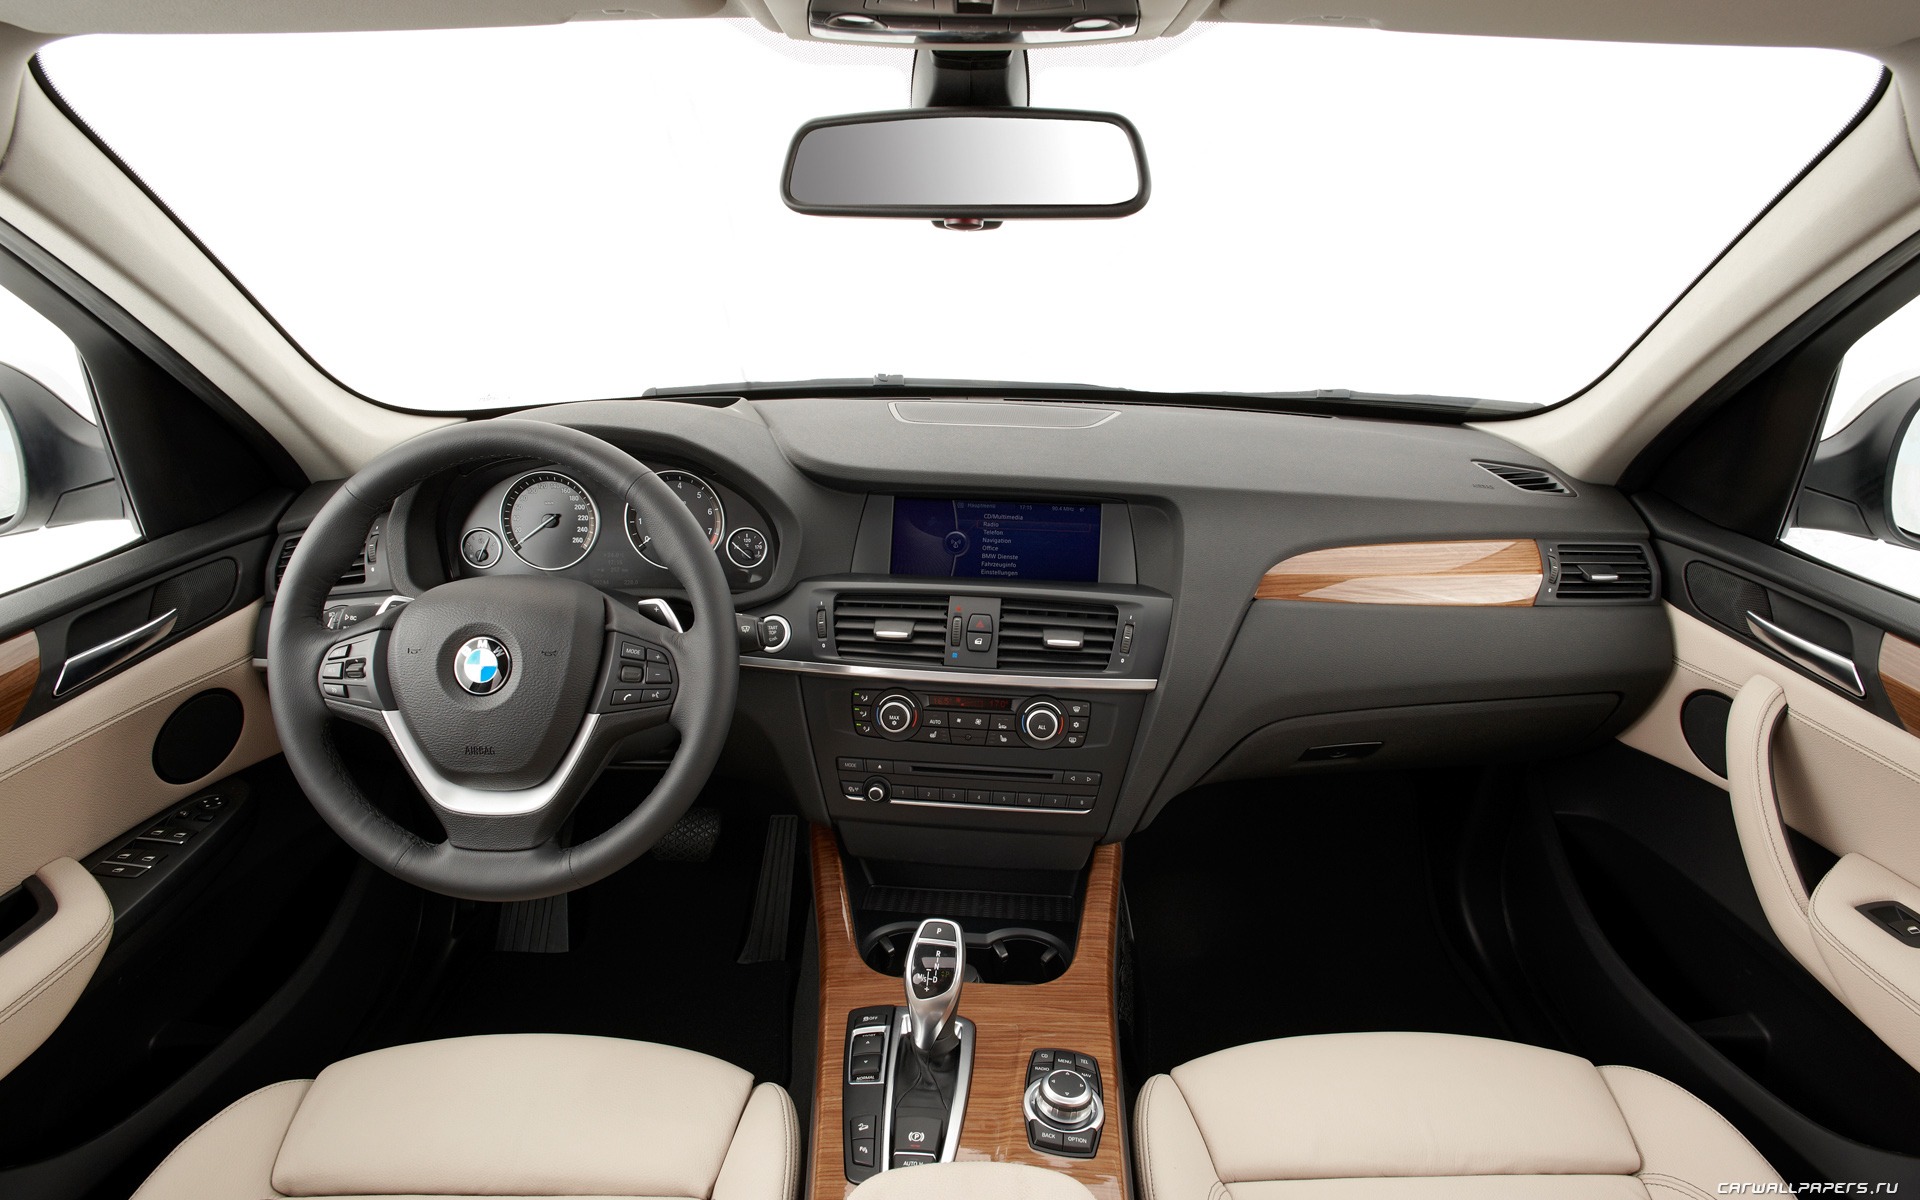 BMW X3 xDrive35i - 2010 寶馬(一) #39 - 1920x1200